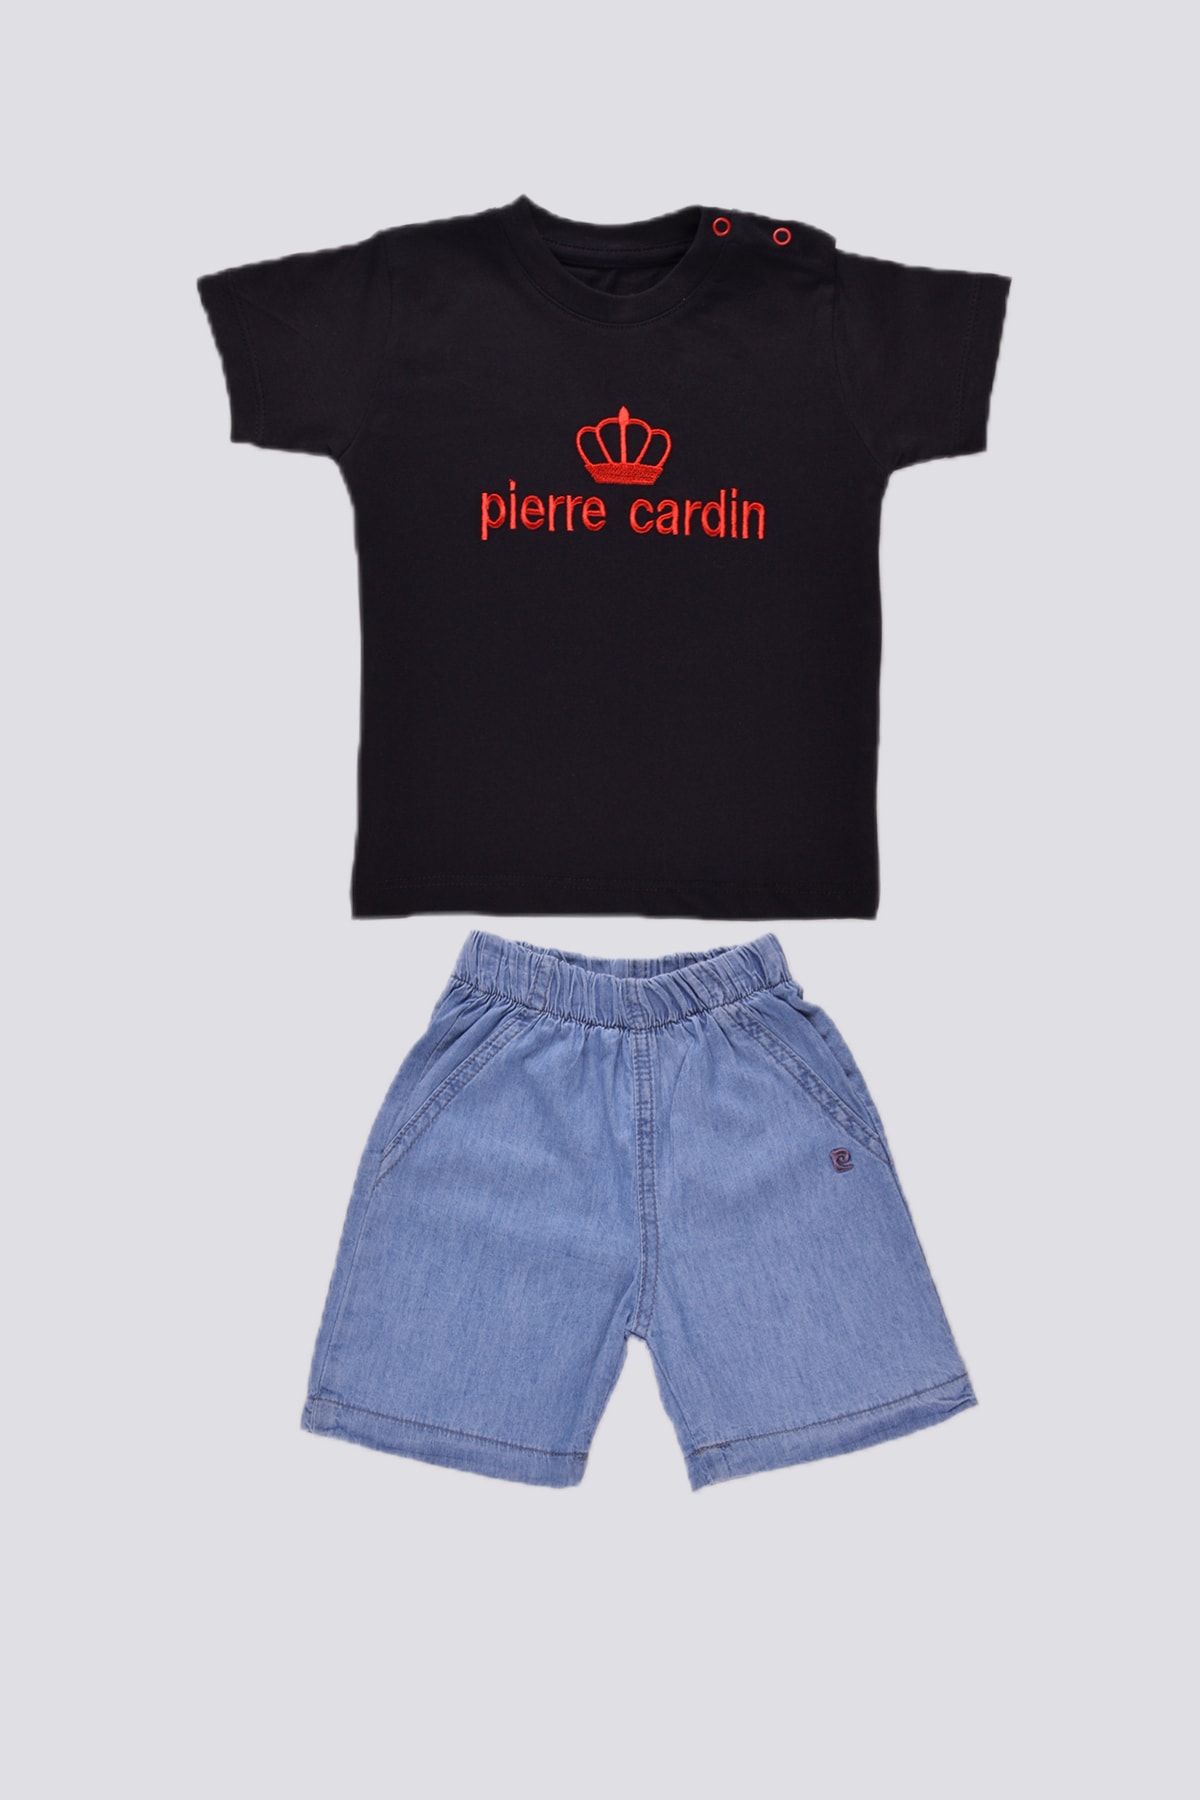 Pierre Cardin 303030 Pc Kot Sortlu Takım